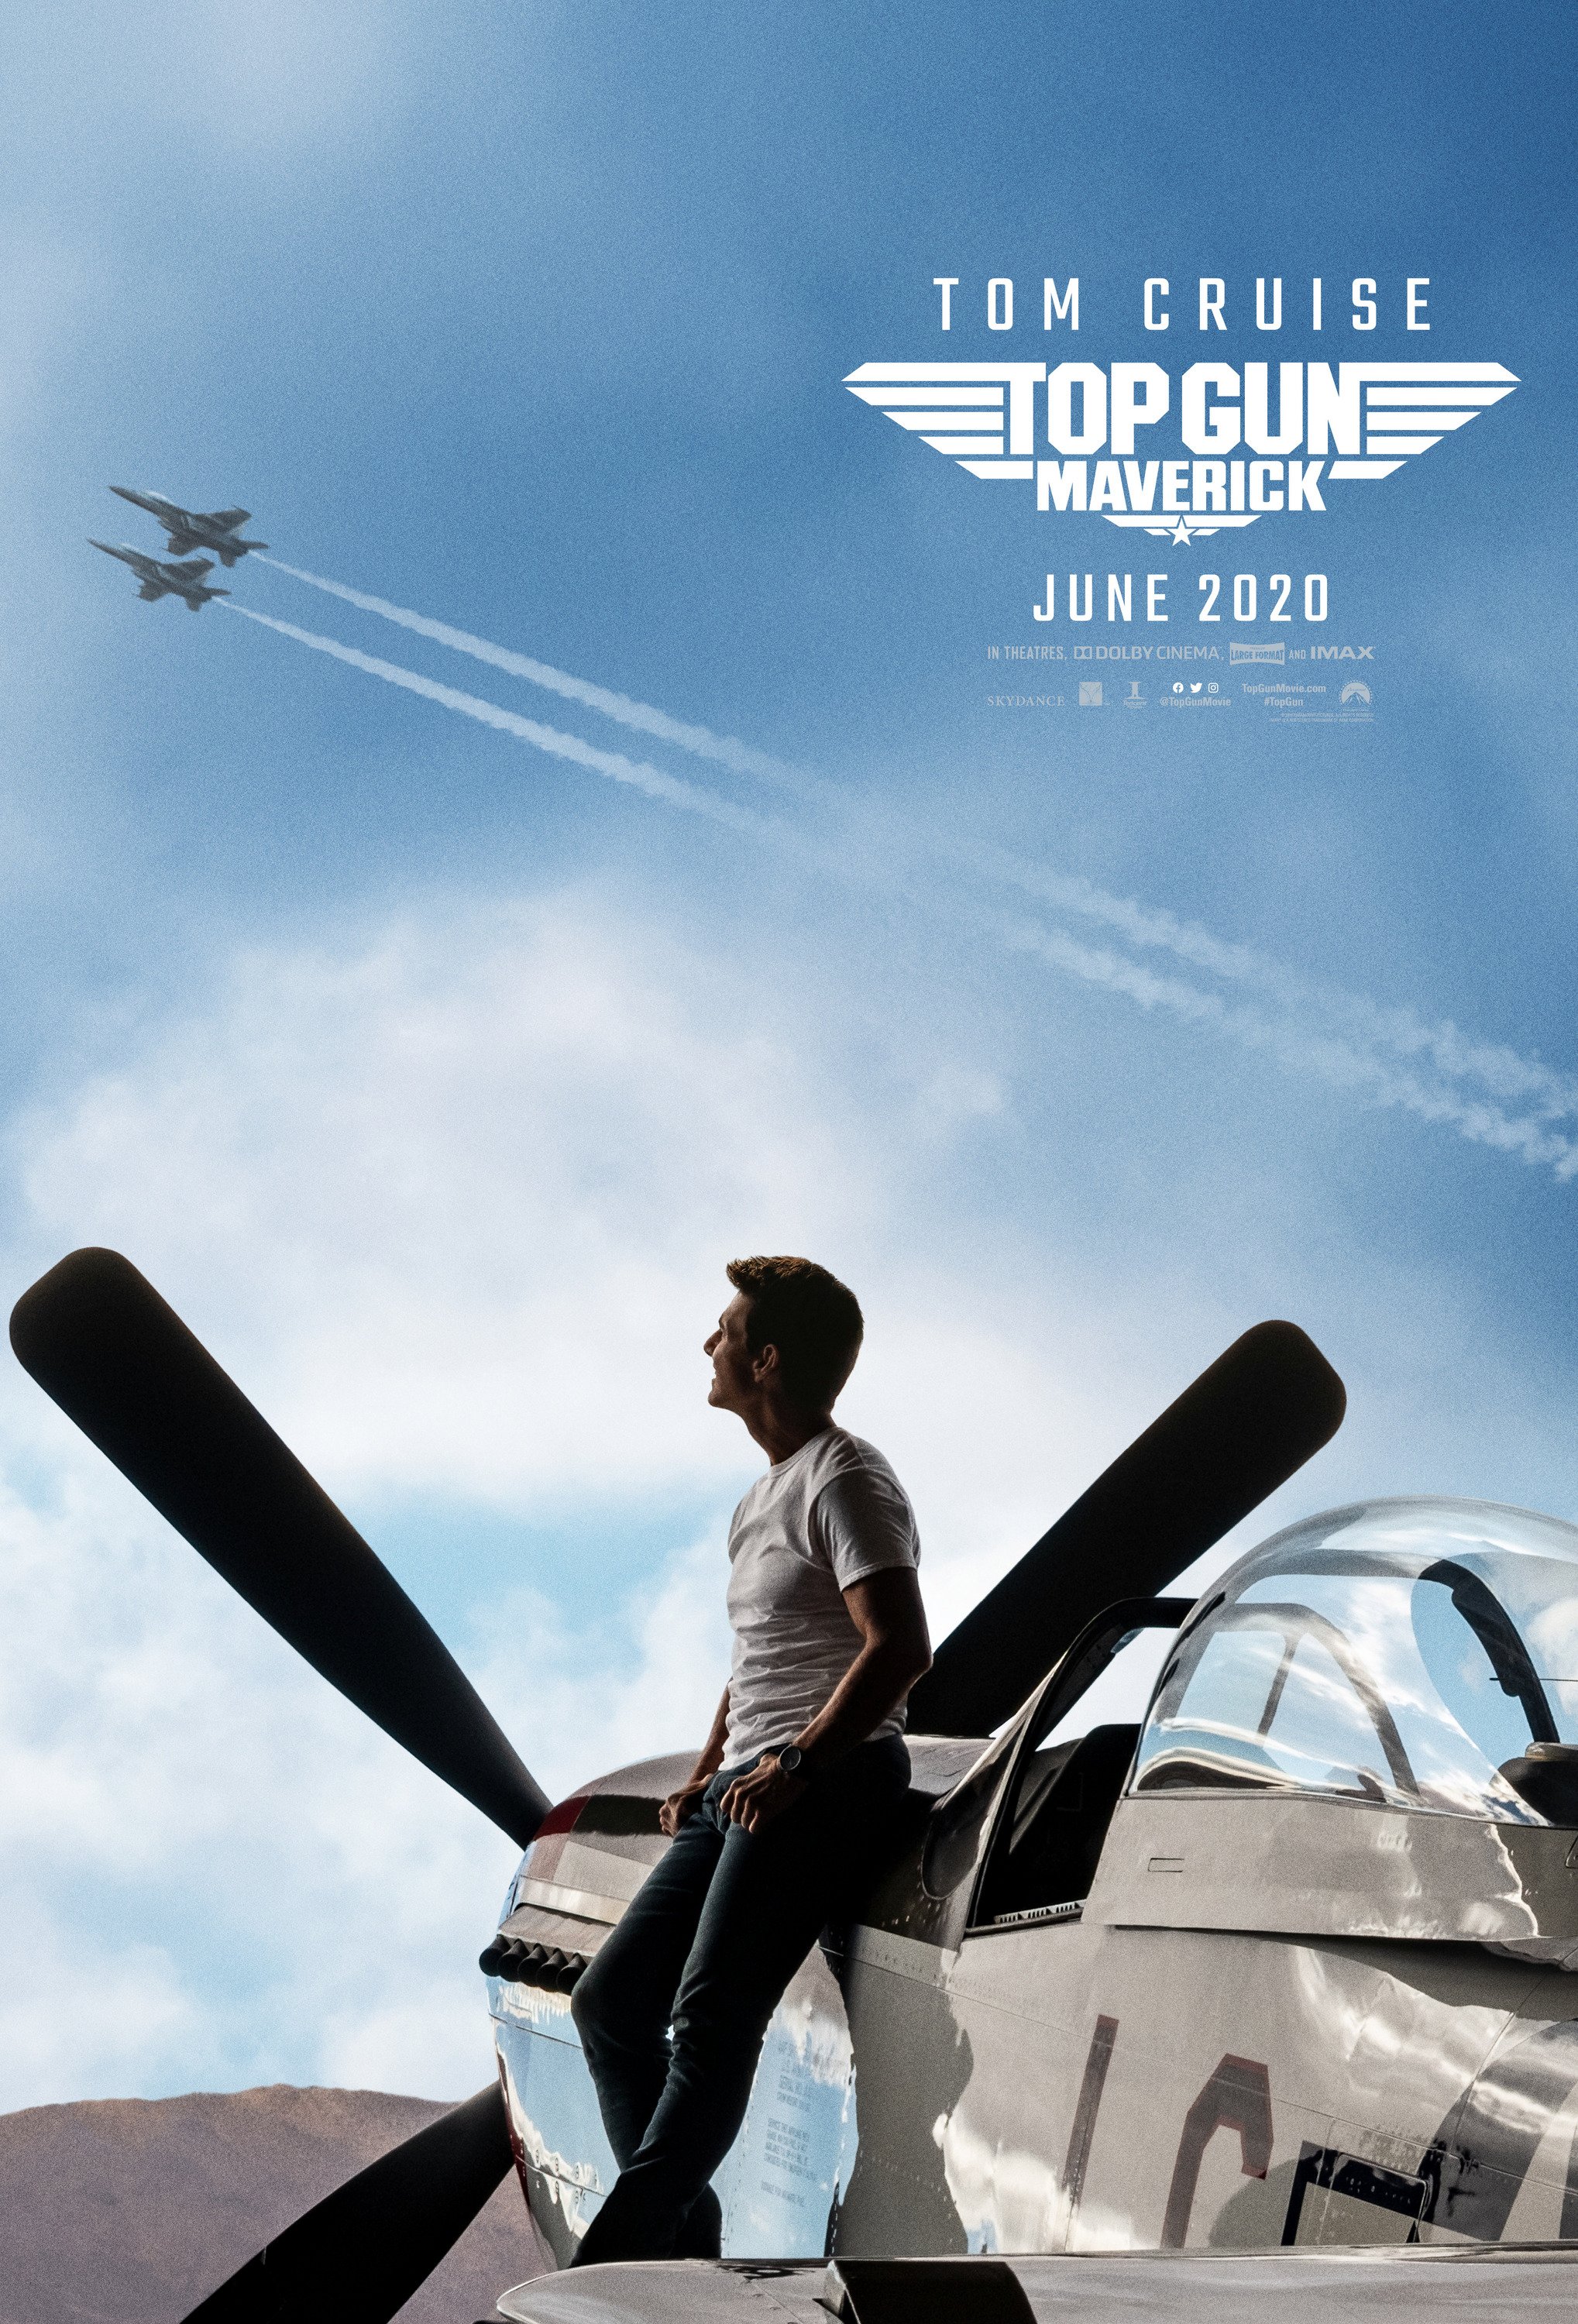 Top-Gun-Poster-011.jpg